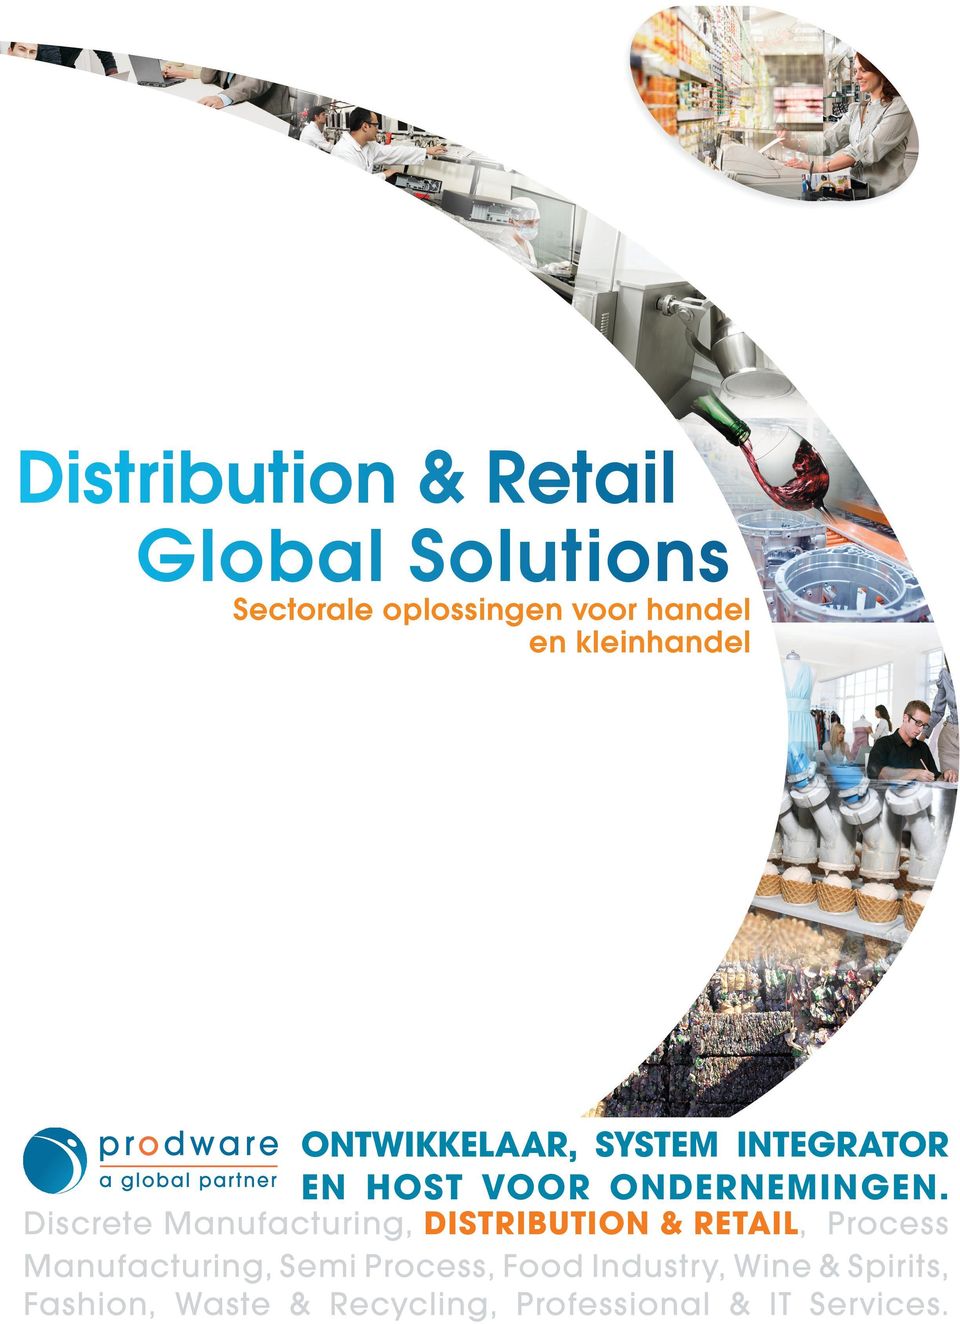 Discrete Manufacturing, Distribution & retail, Process